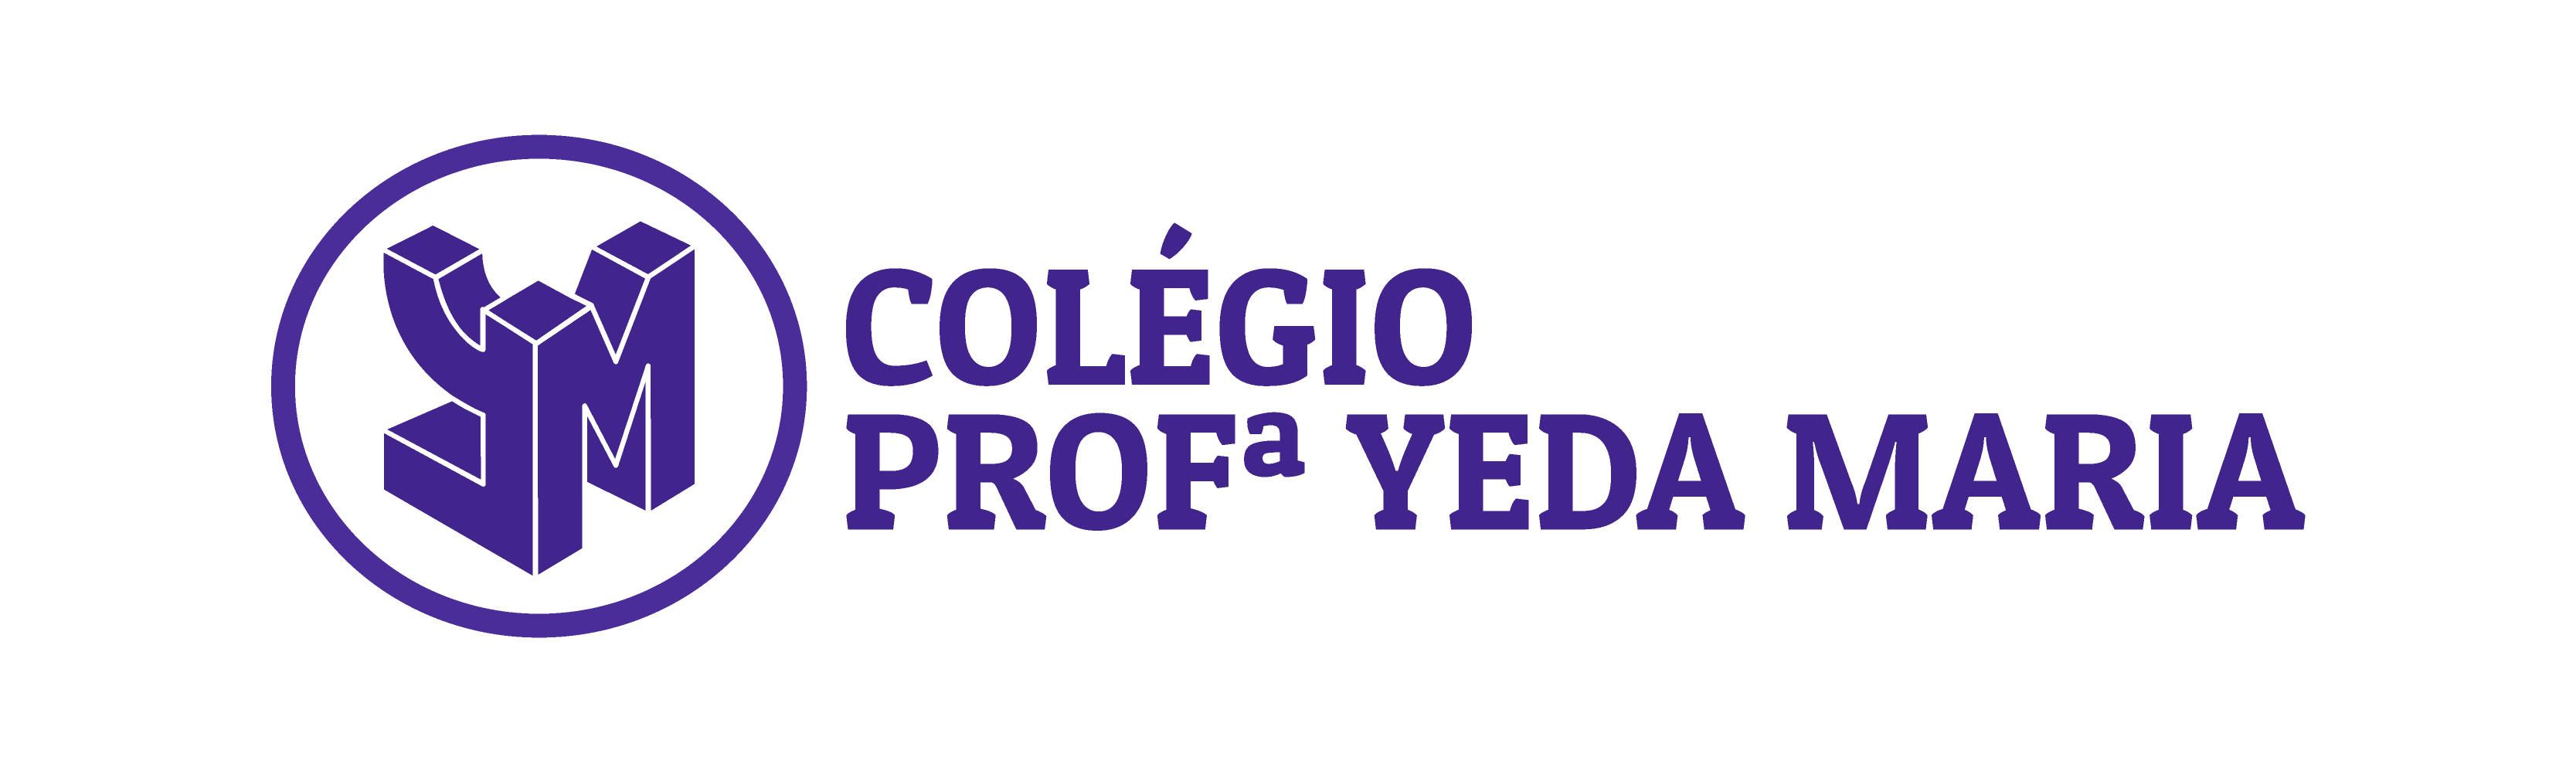 Colegio Yeda Maria